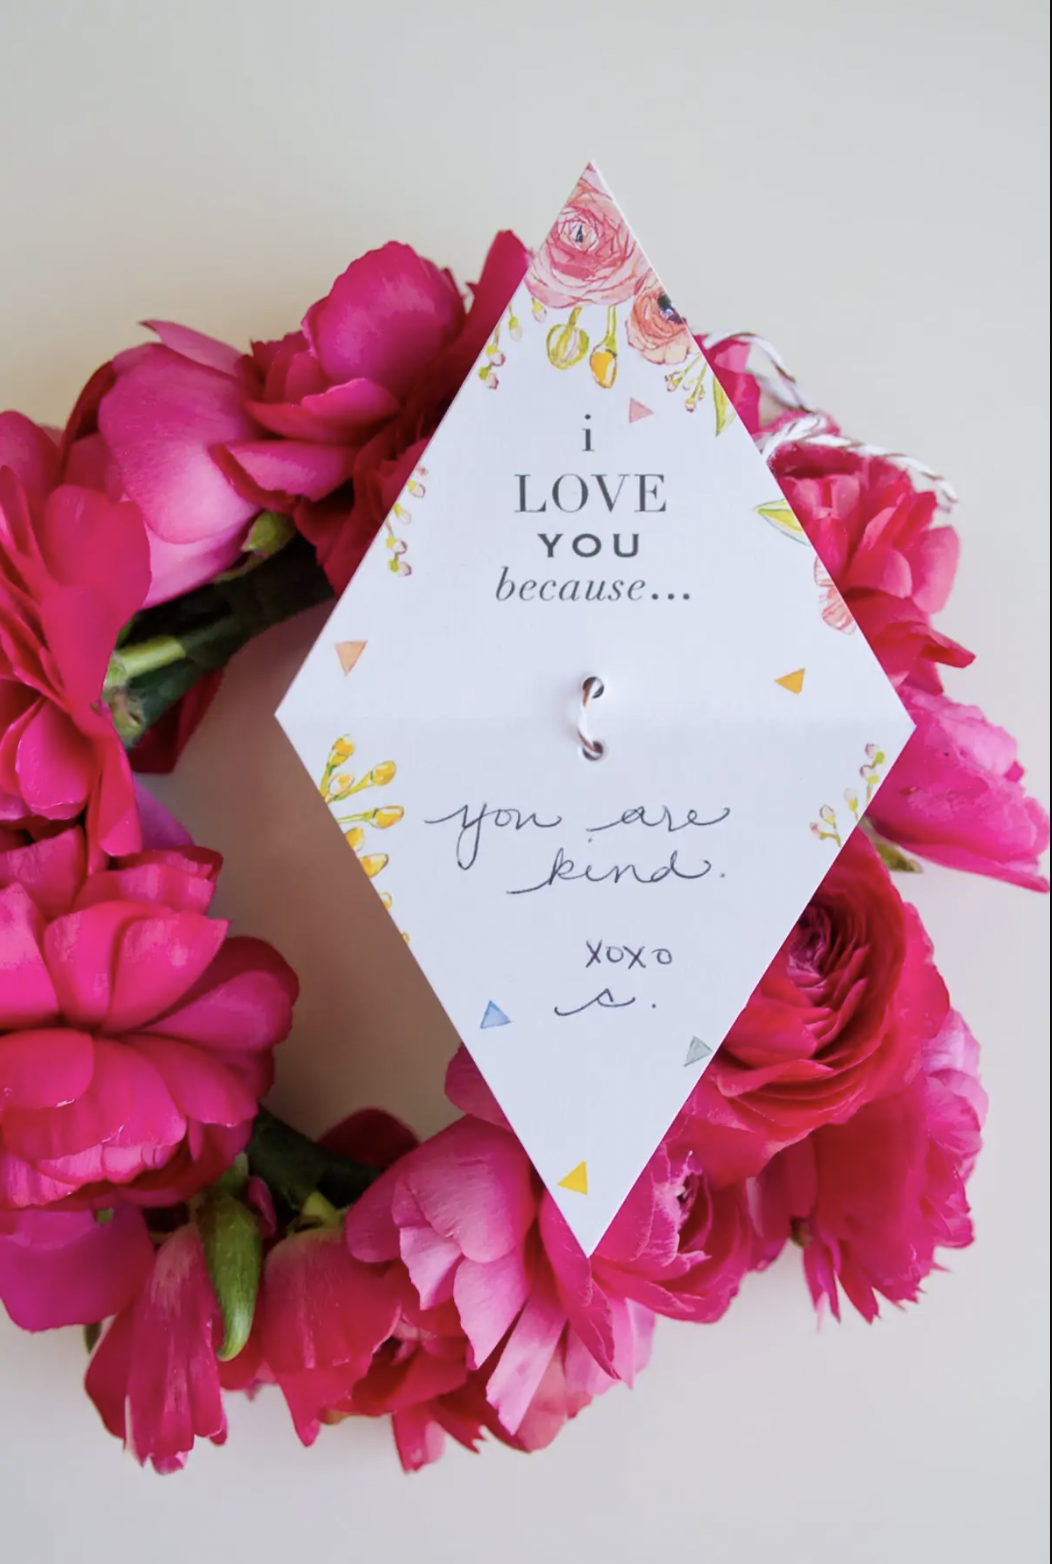 I Love U Rose Pop up Flower Box for Mother's Day